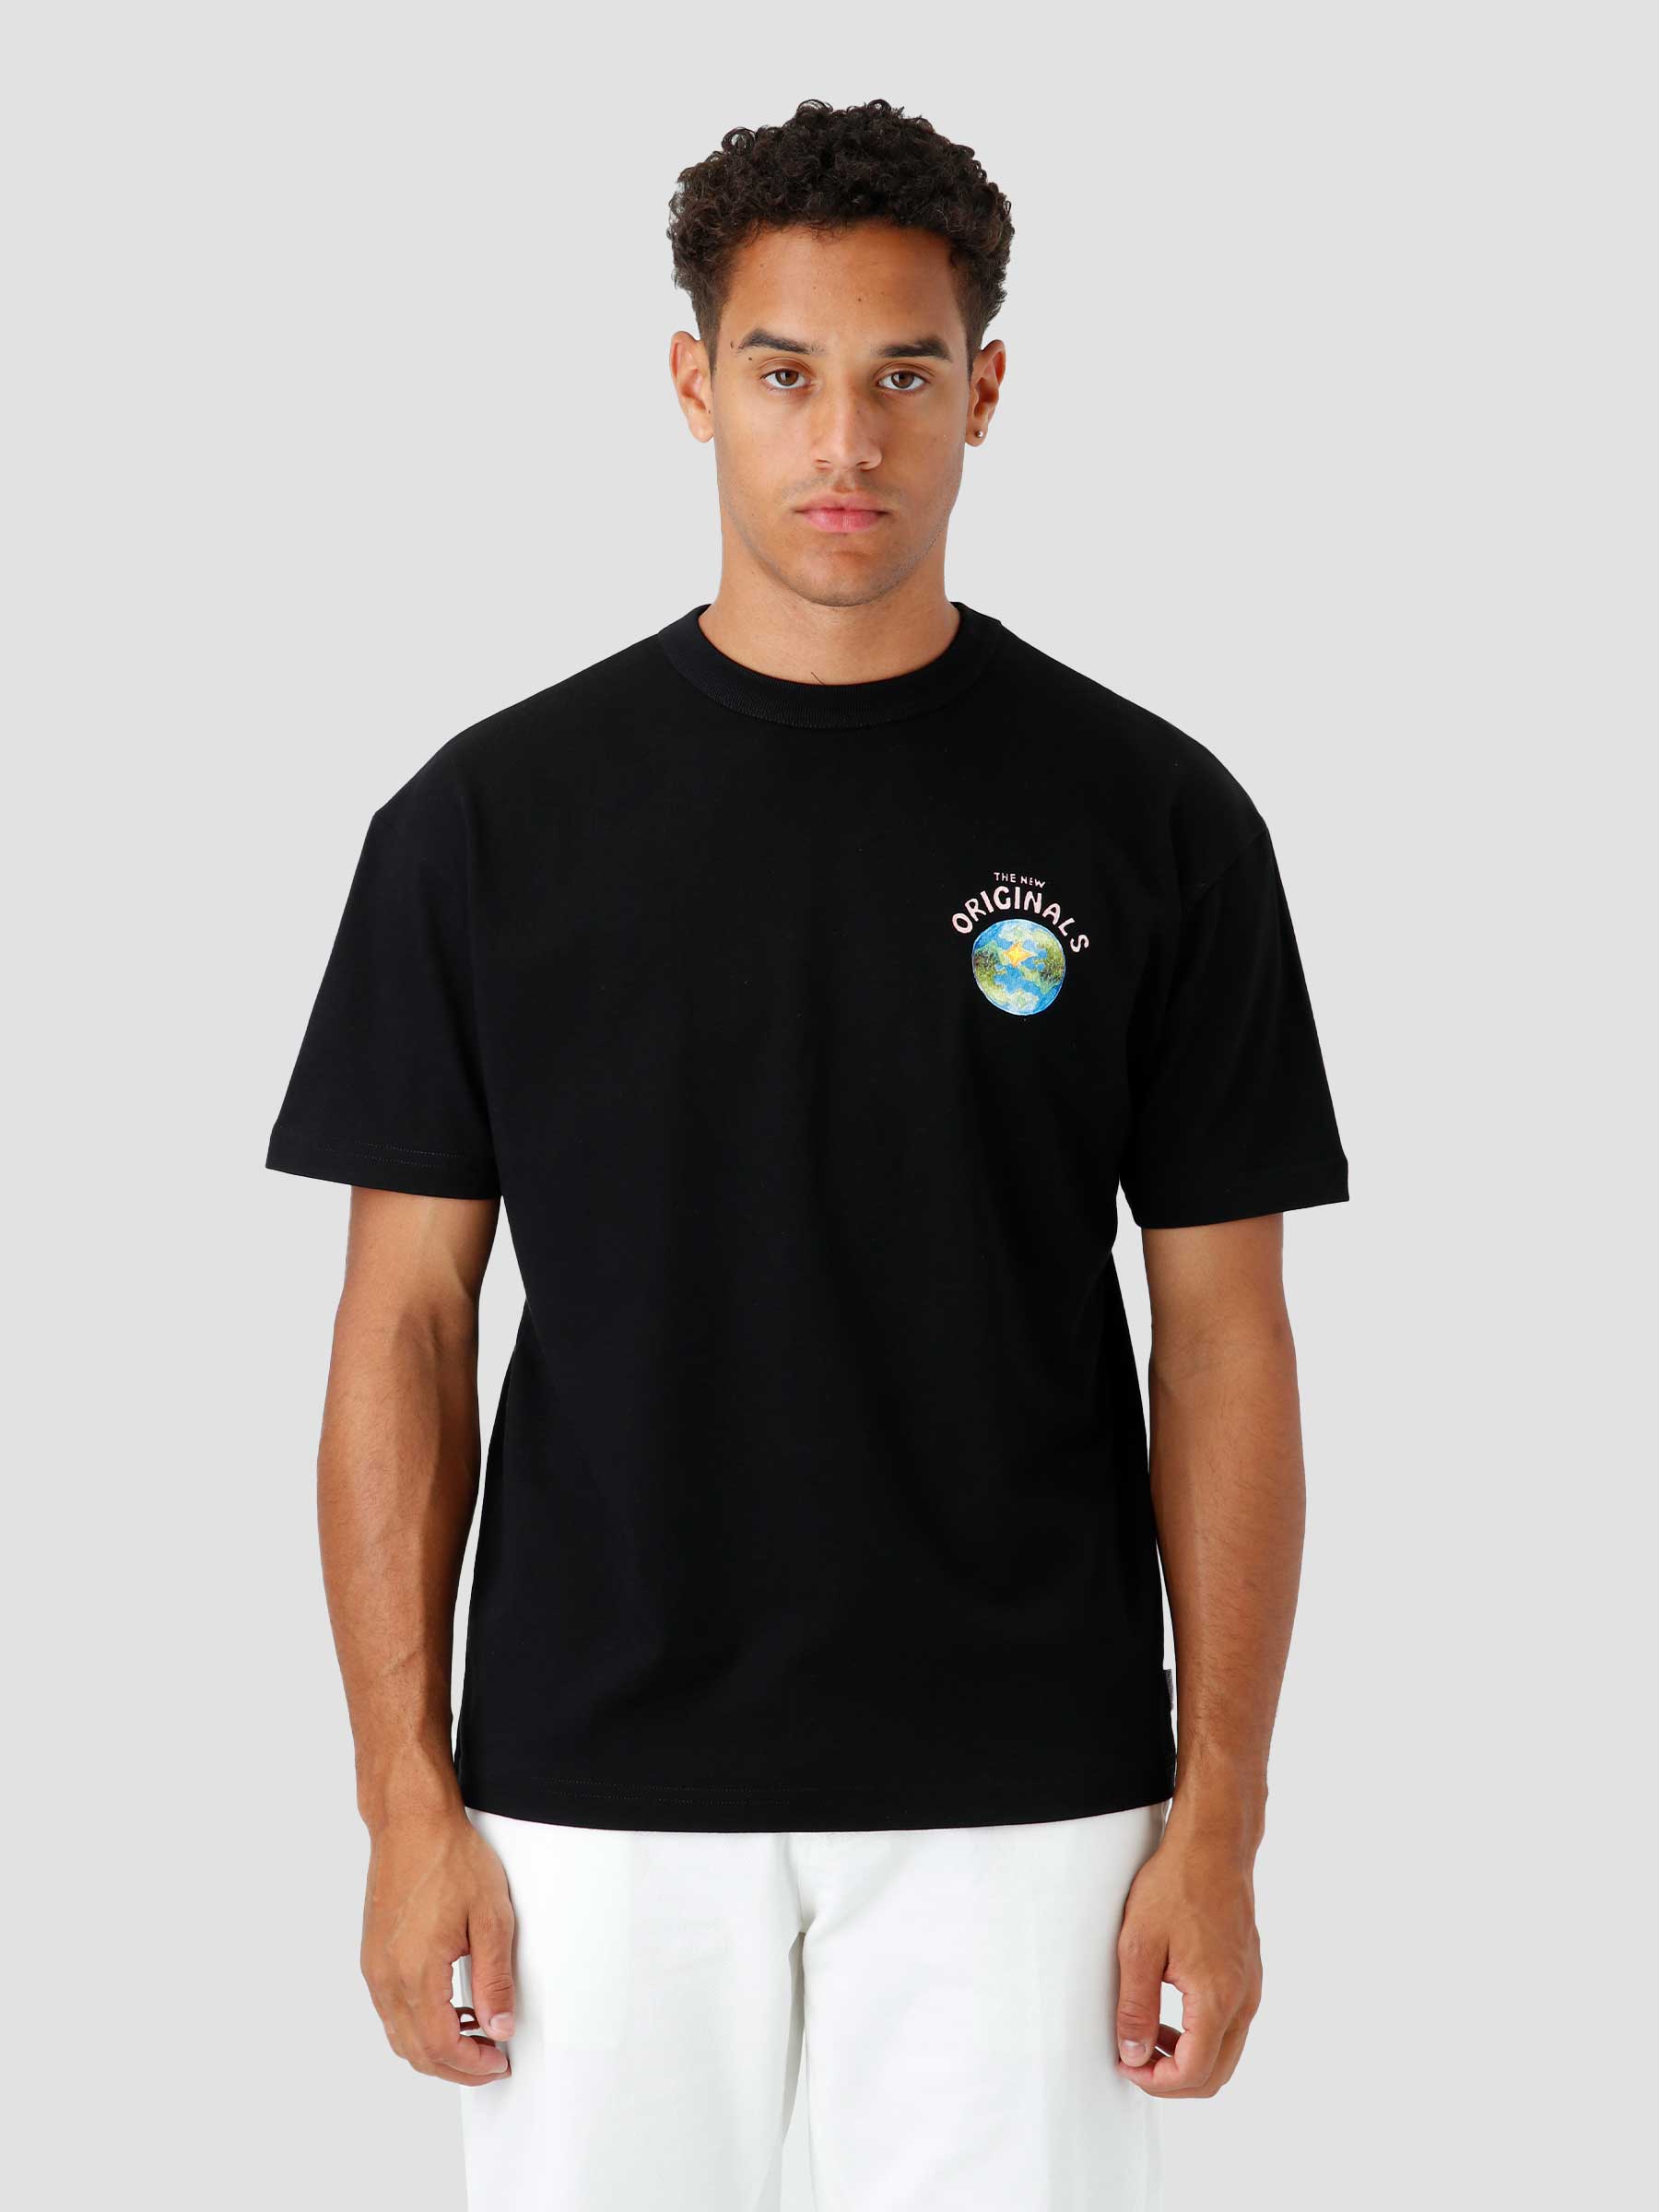 The New Originals Freddy Dove T-shirt Black 101FDF22 | Freshcotton